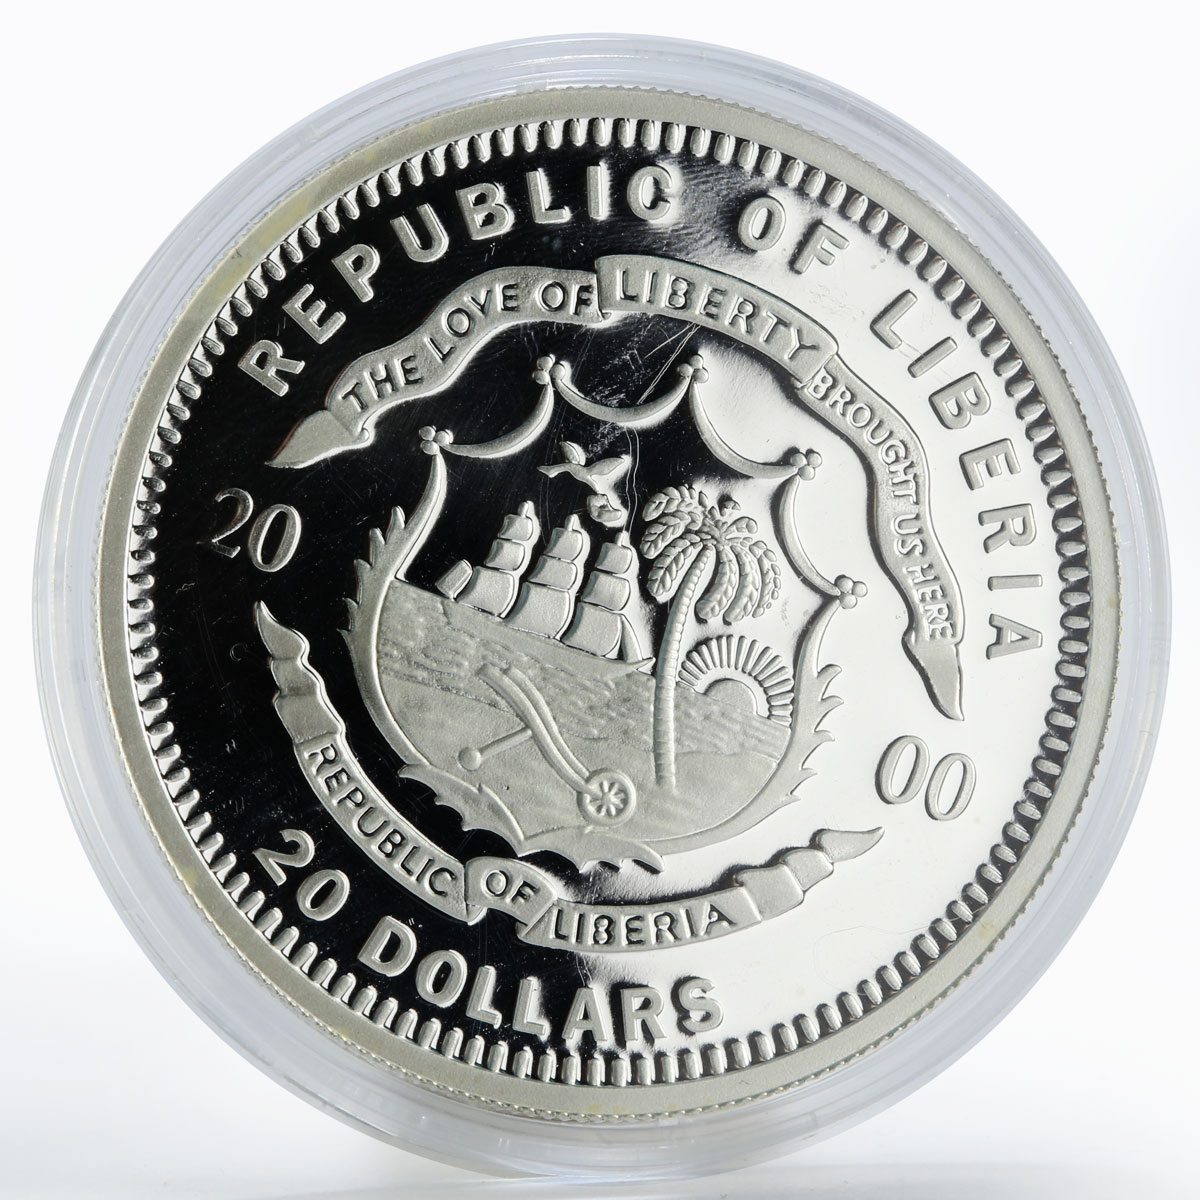 Liberia 20 dollars Ship Nautilus silver proof coin 2000